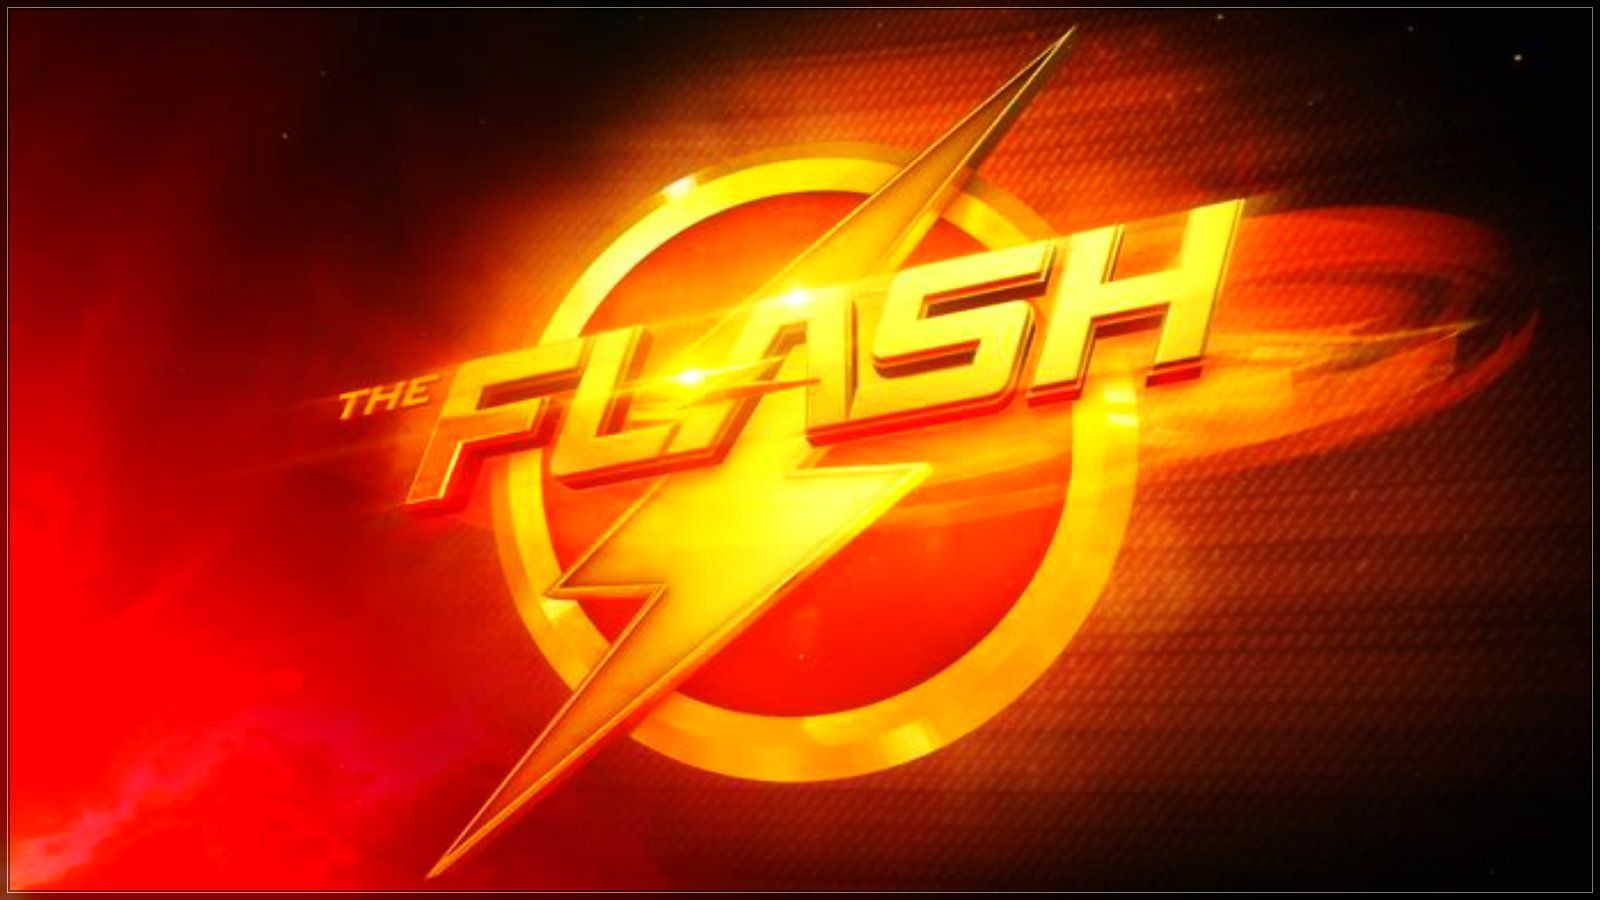 The Flash - The Flash (CW) Wallpaper (37656143) - Fanpop